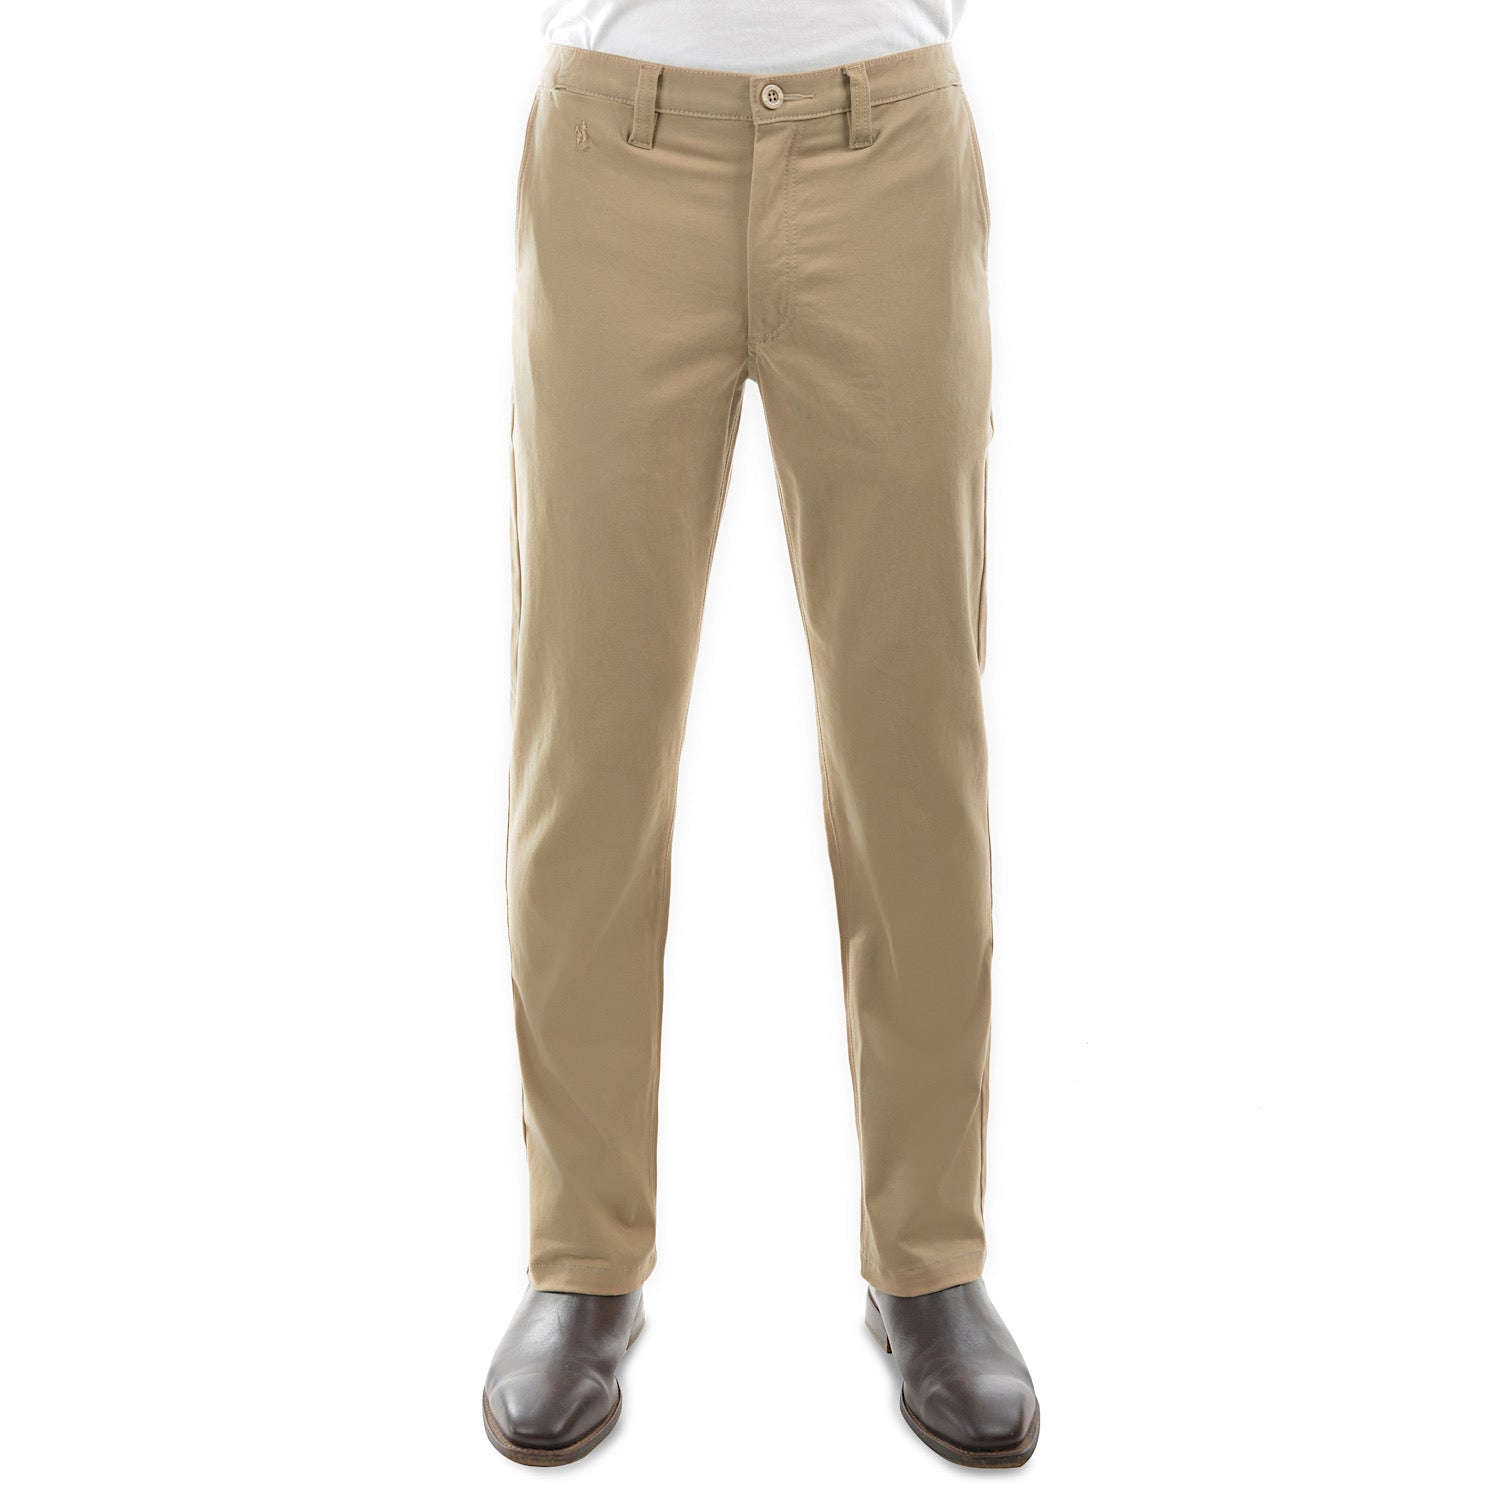 Men's Wrangler Workwear Cargo Pant, Sizes 32-44 - Walmart.com